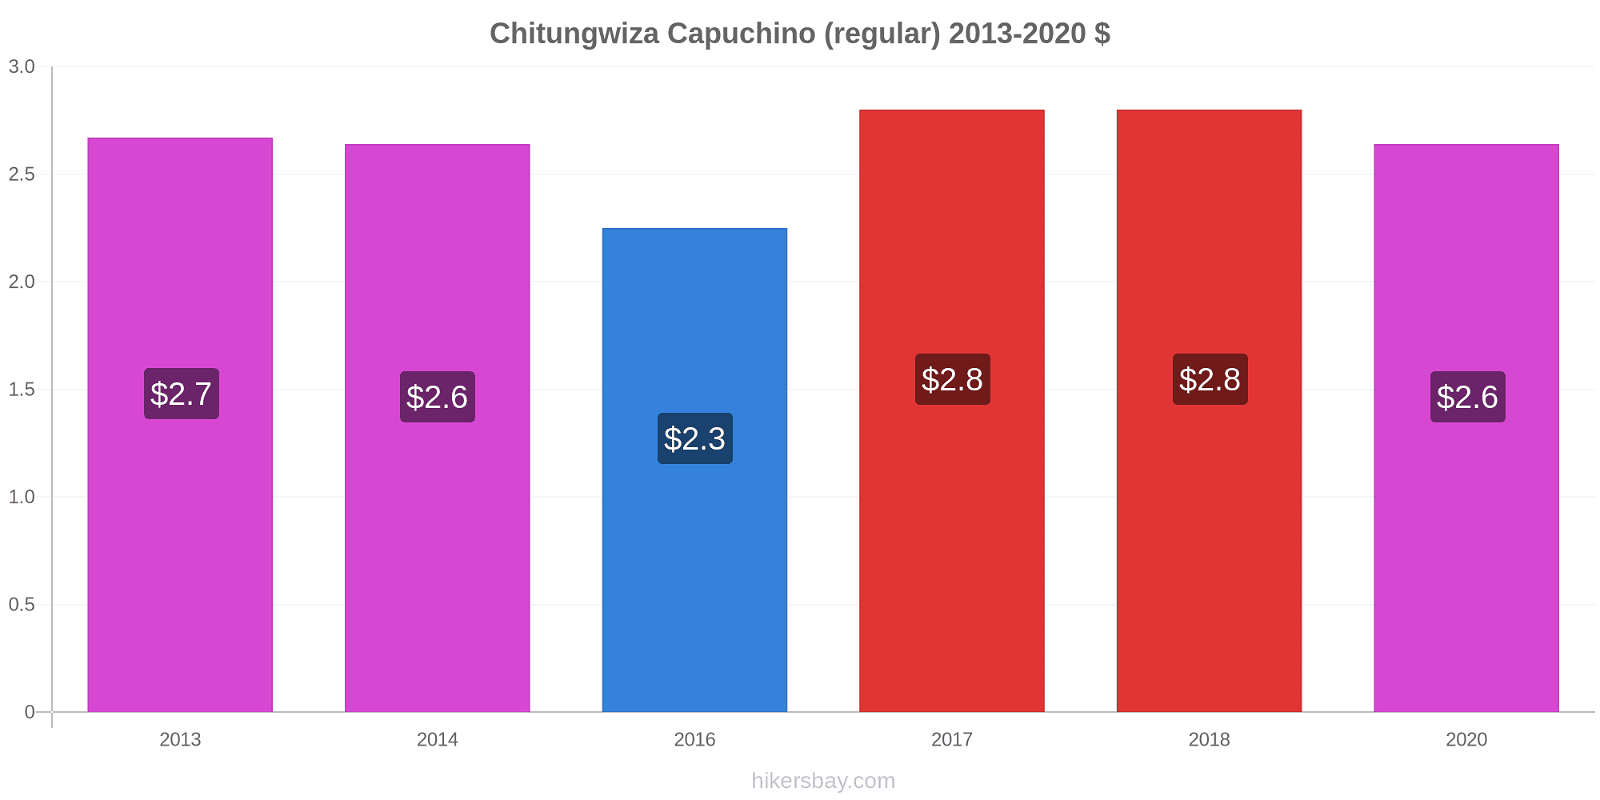 Chitungwiza cambios de precios Capuchino (regular) hikersbay.com